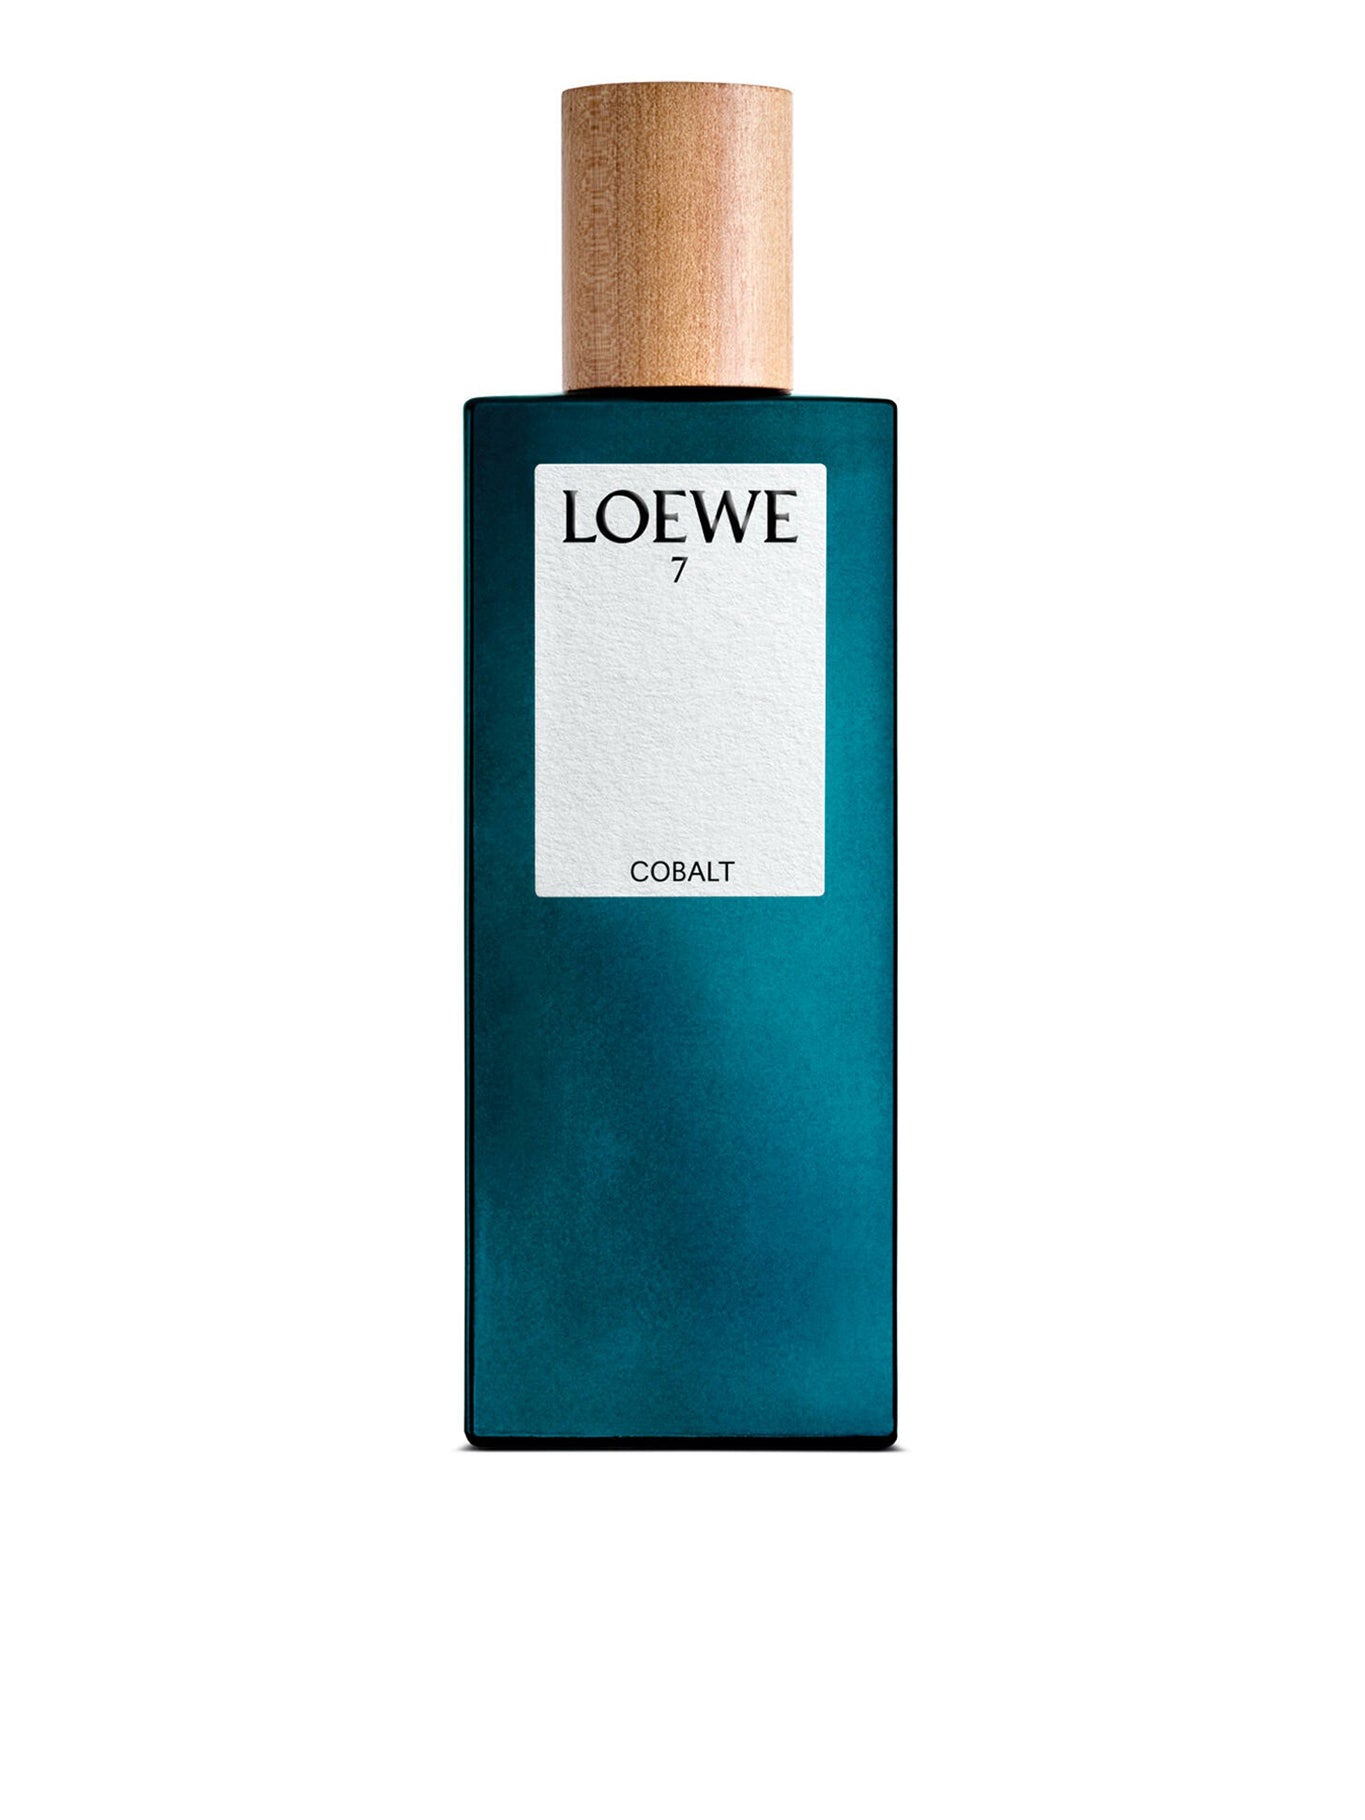 LOEWE 7 COBALT Eau de Parfum  100ML